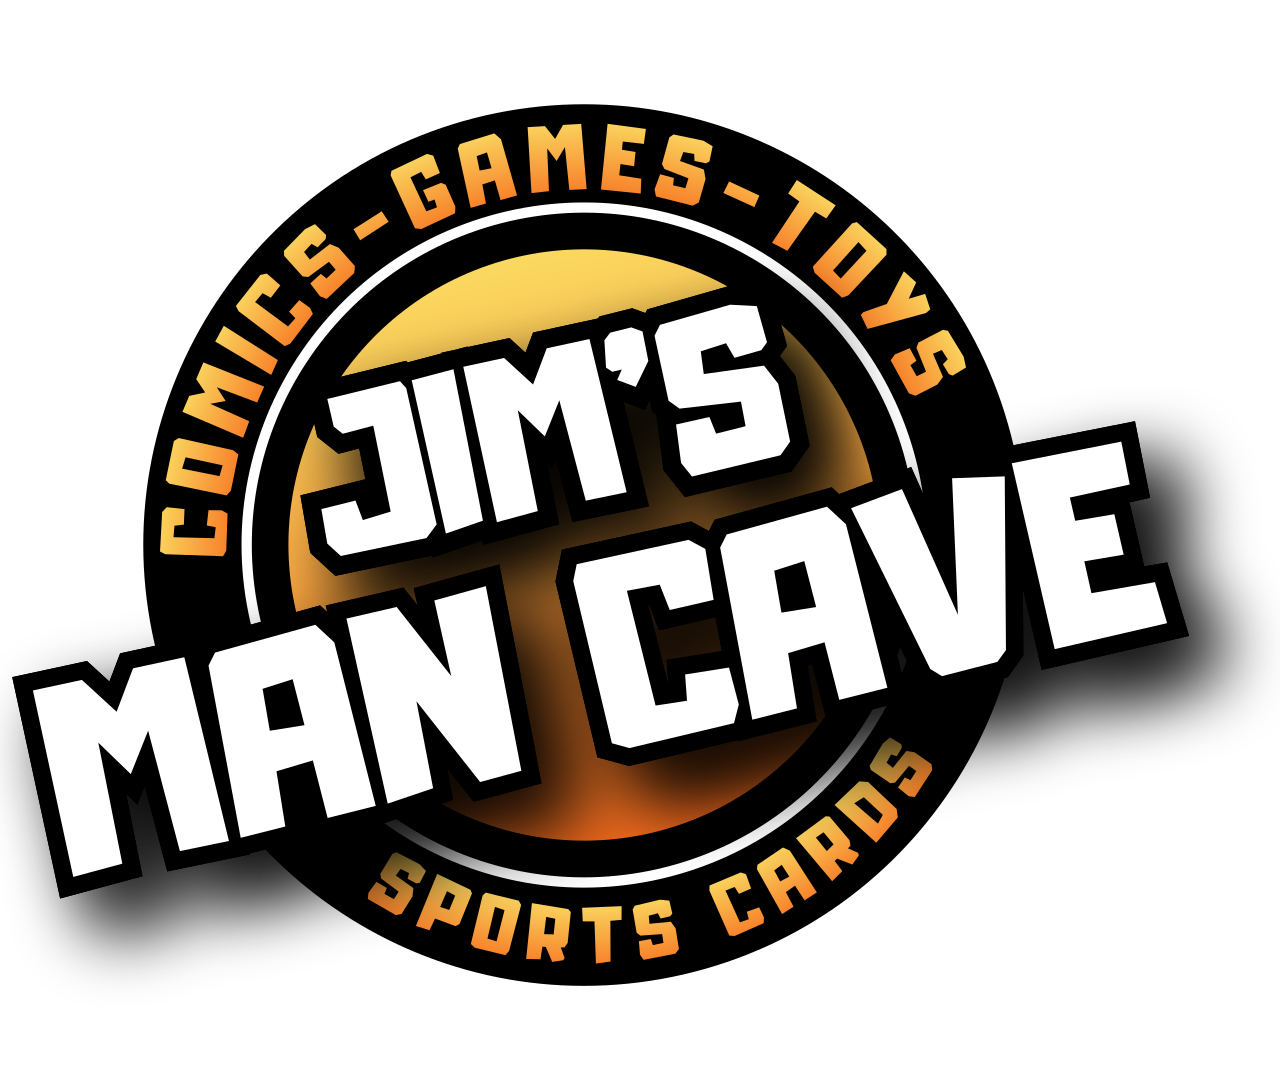 MAN CAVE's logo